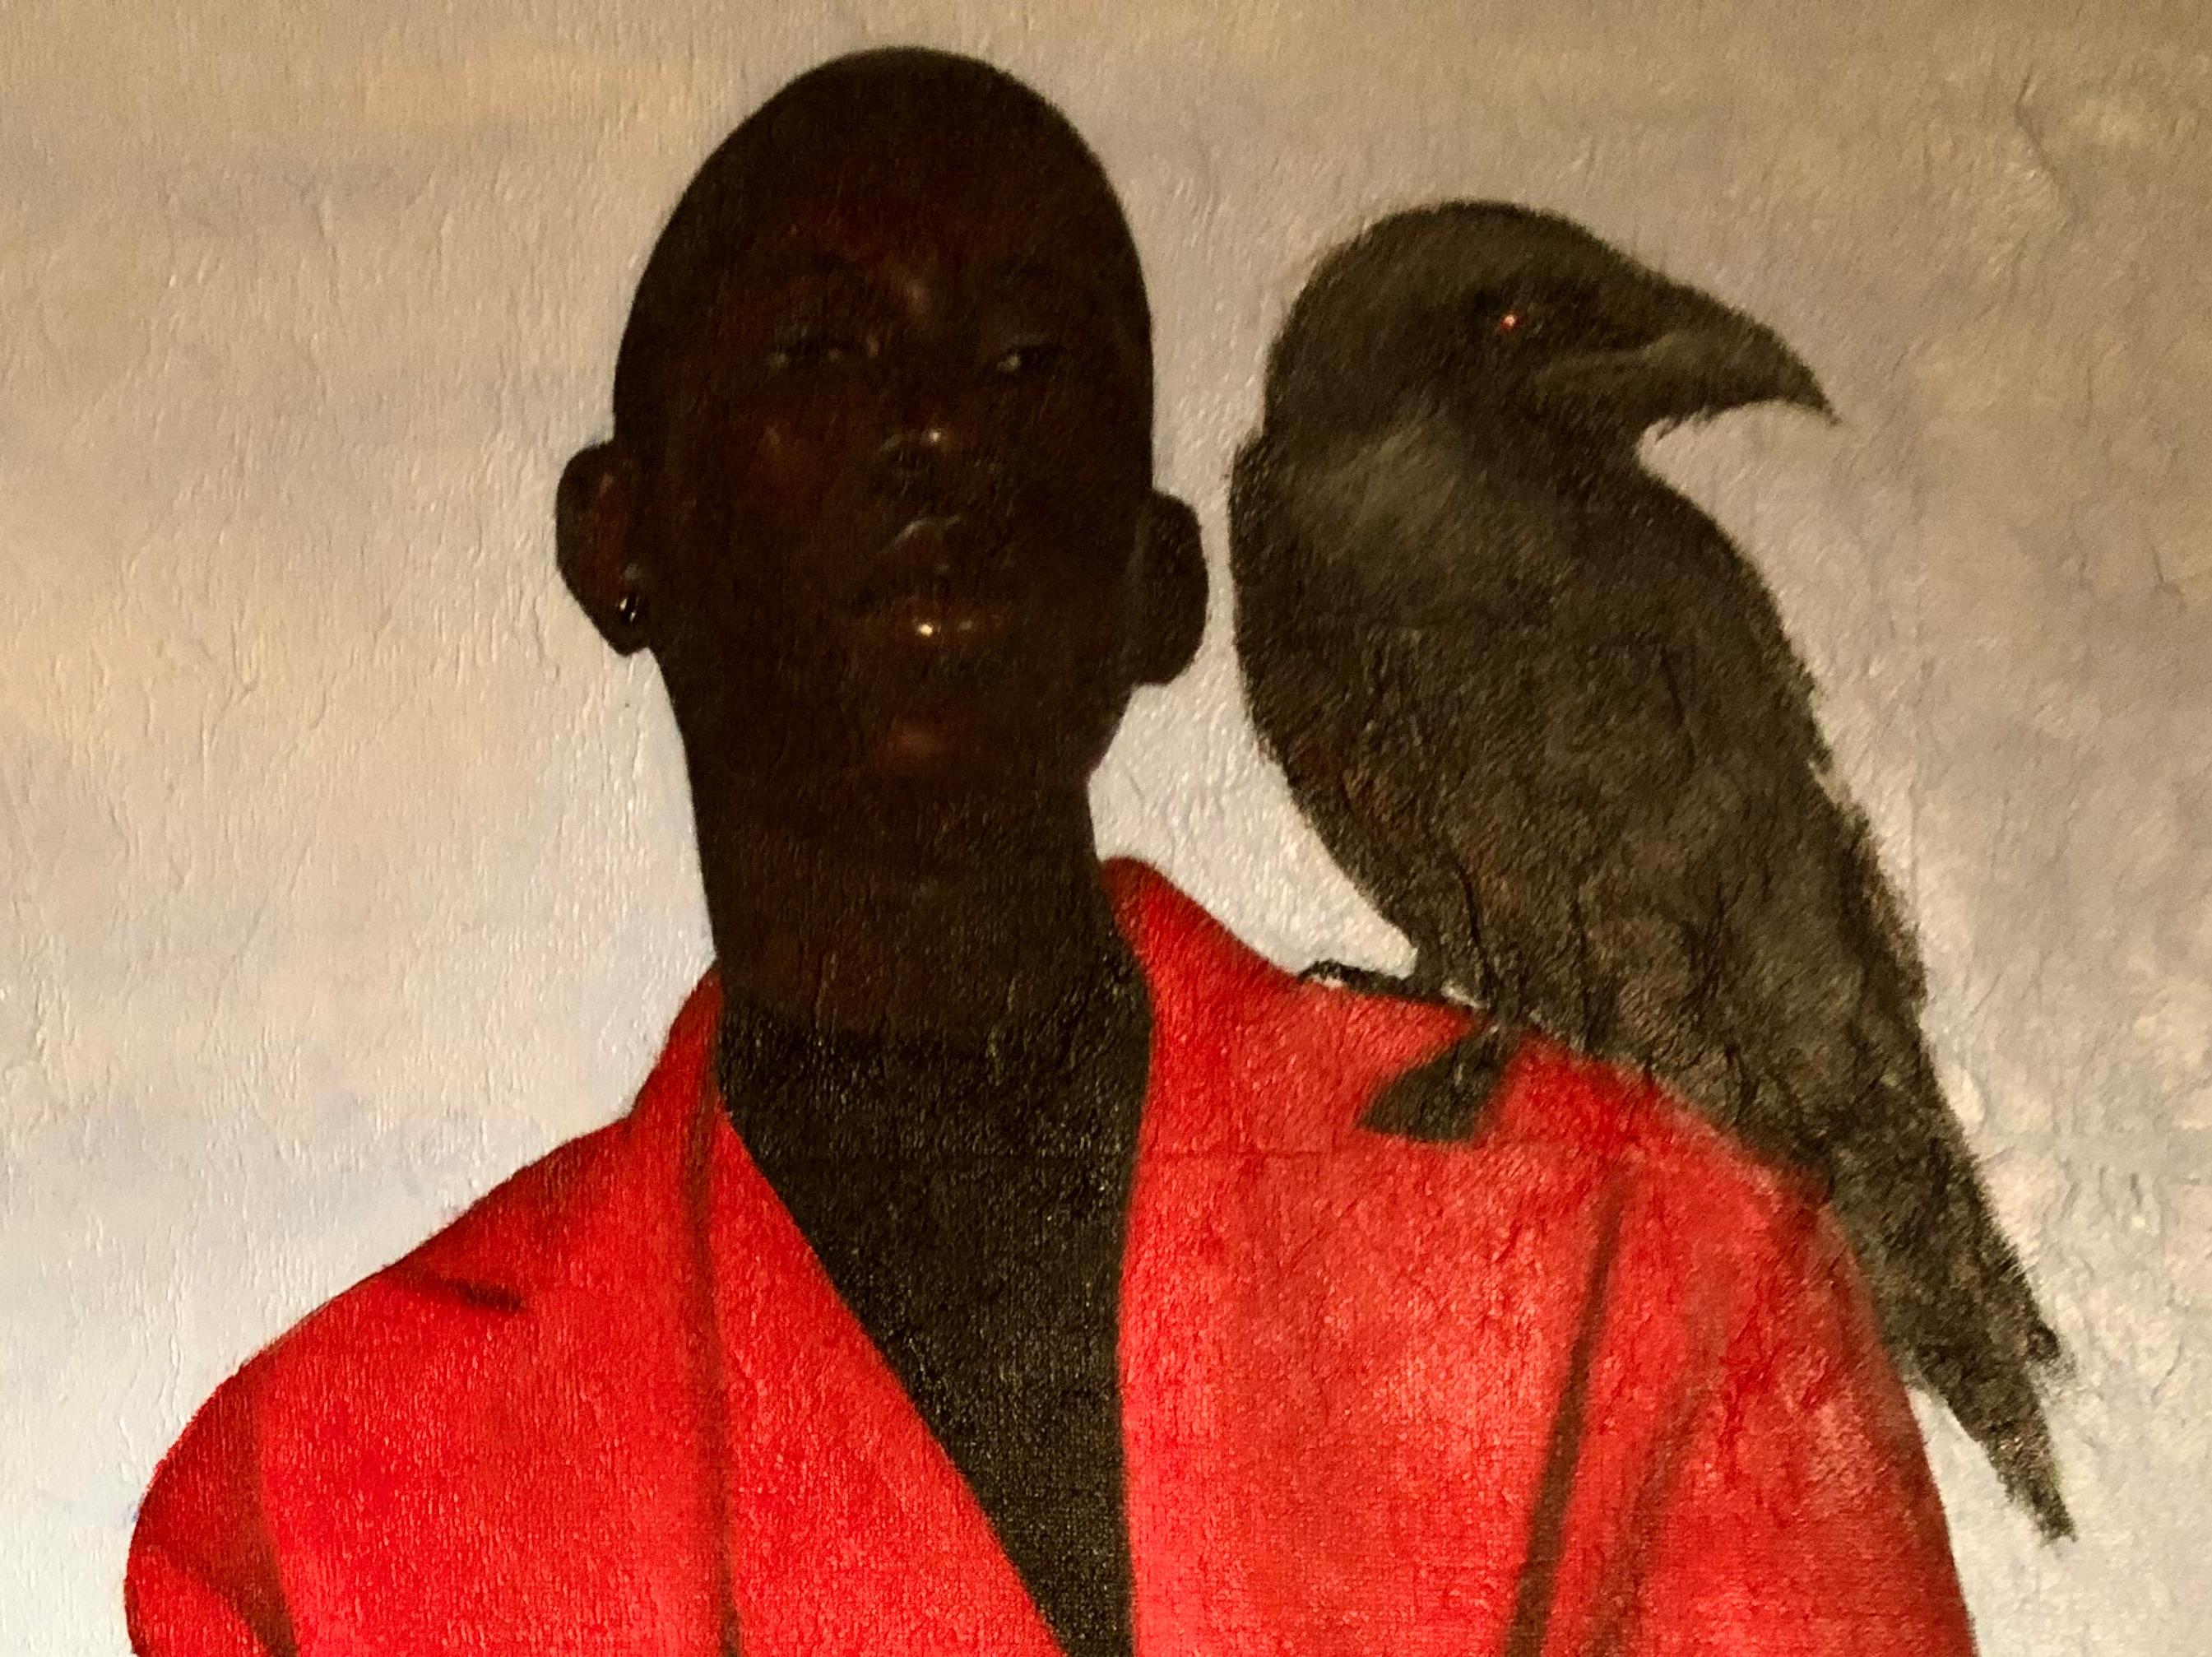 The Stereotyped - Painting by Akinboye Akinola Peter